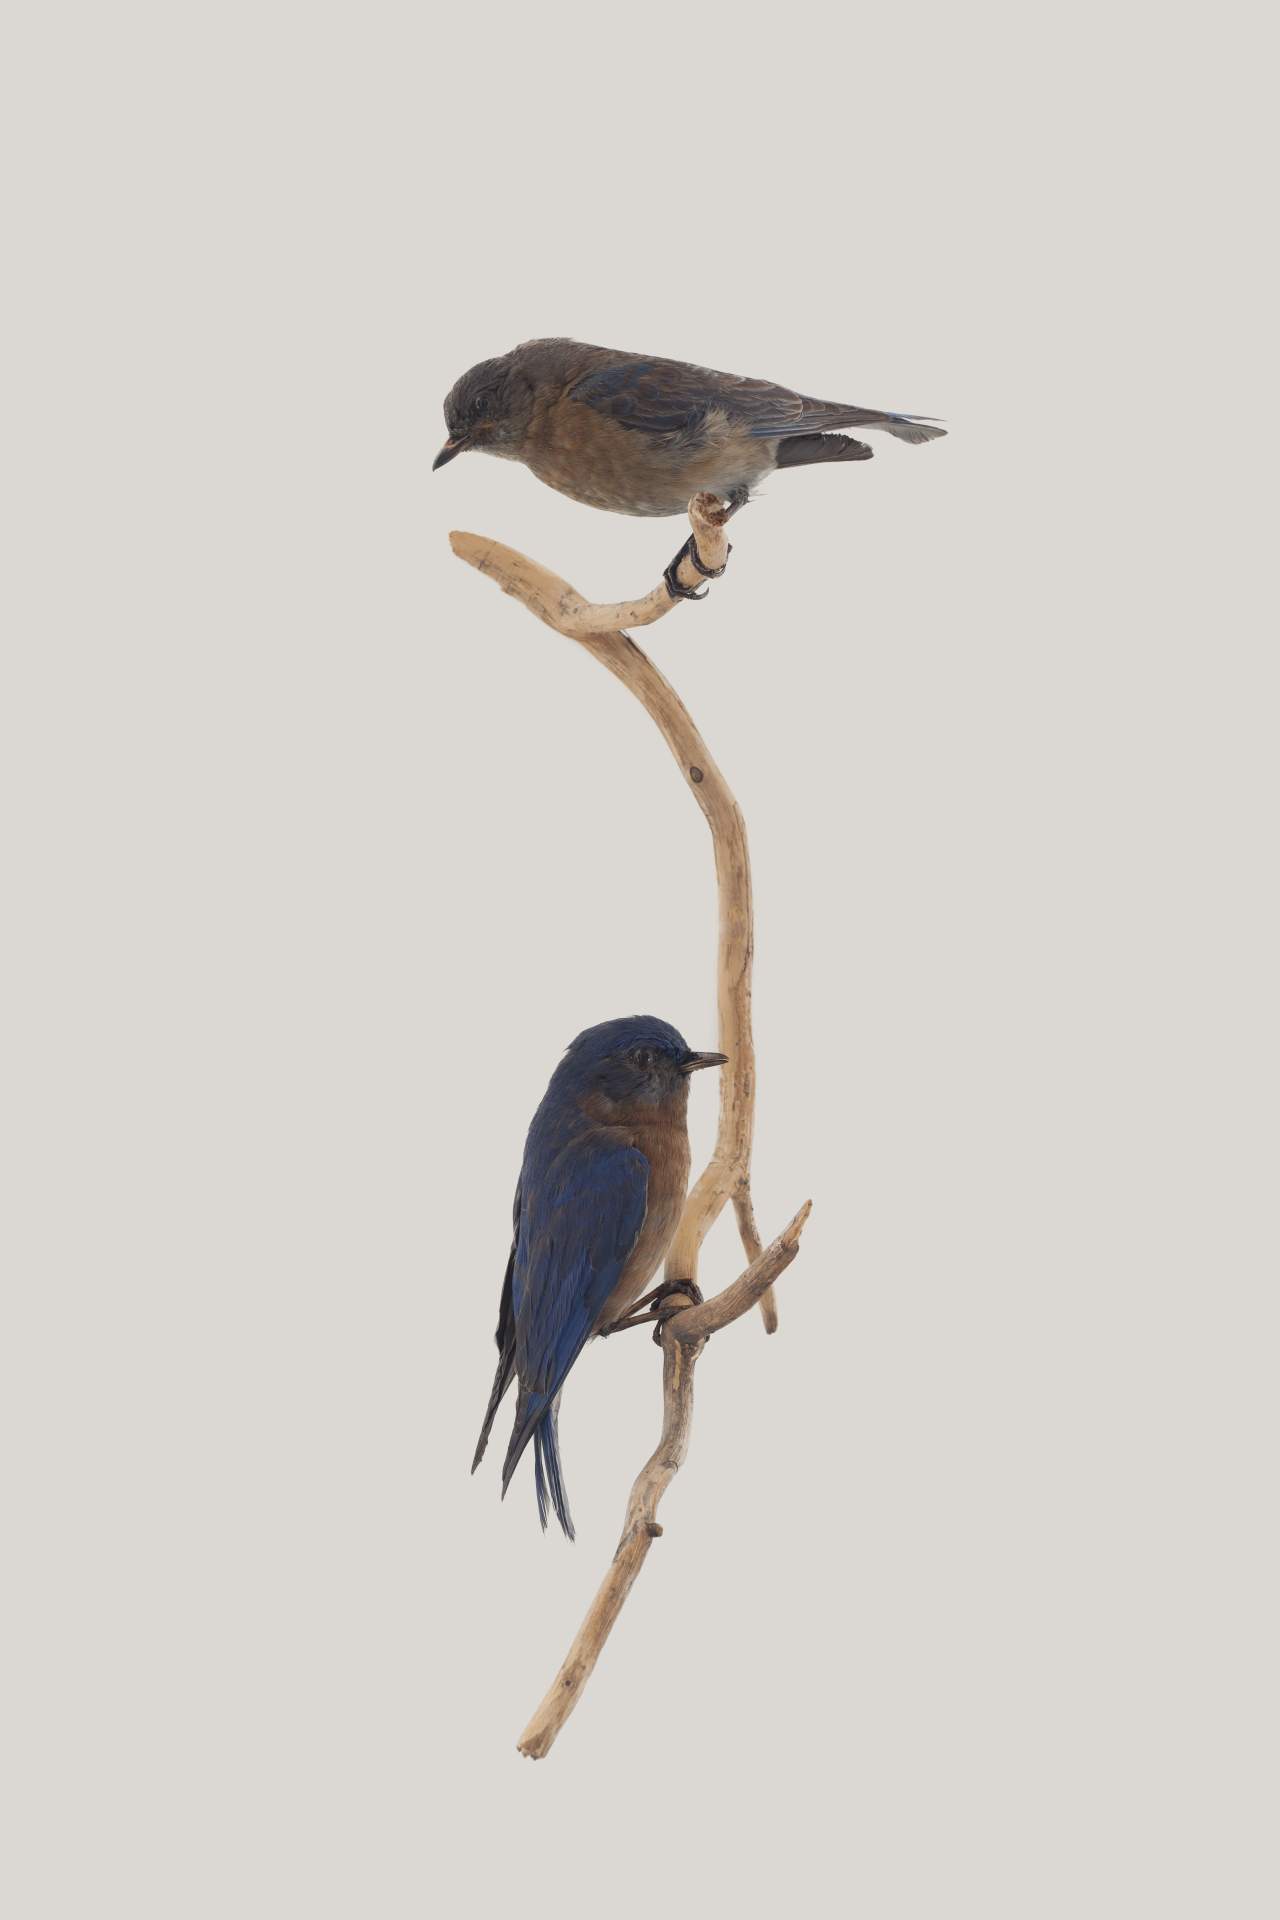 Male and Female Eastern Bluebirds (Sialia sialis)